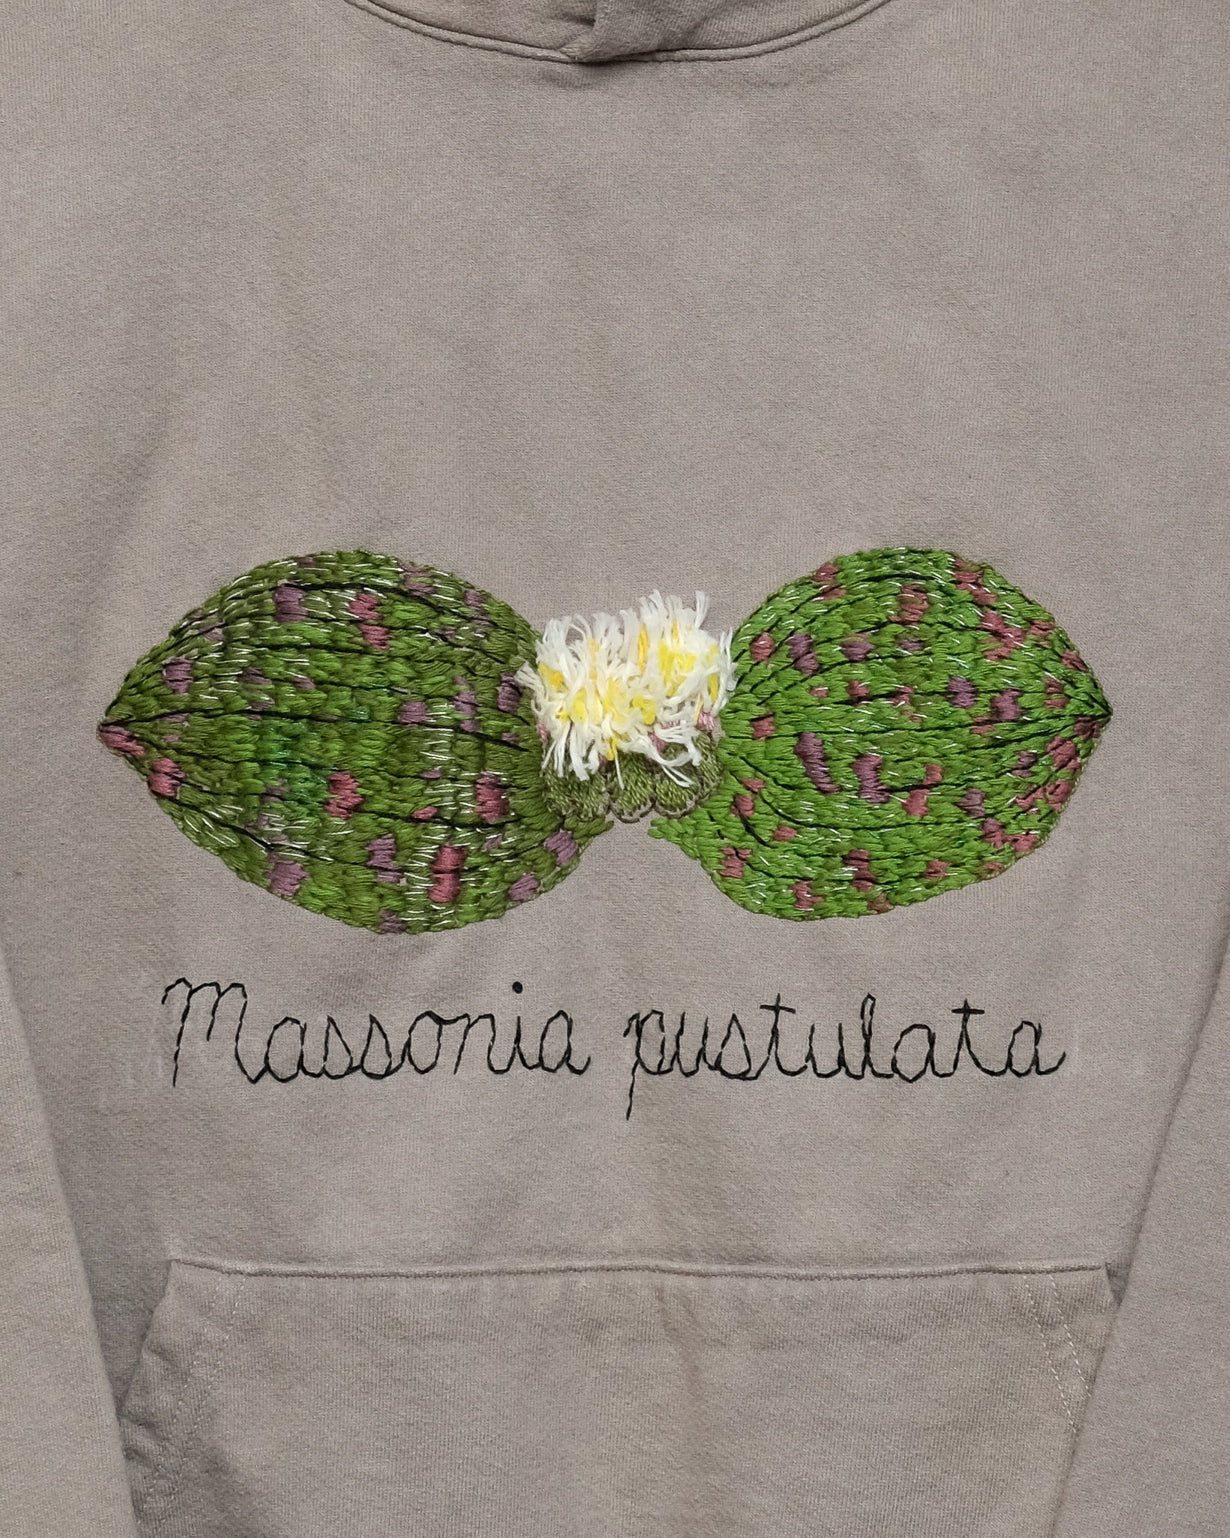 Massonia pustulata (2XL) Hooded Sweatshirt